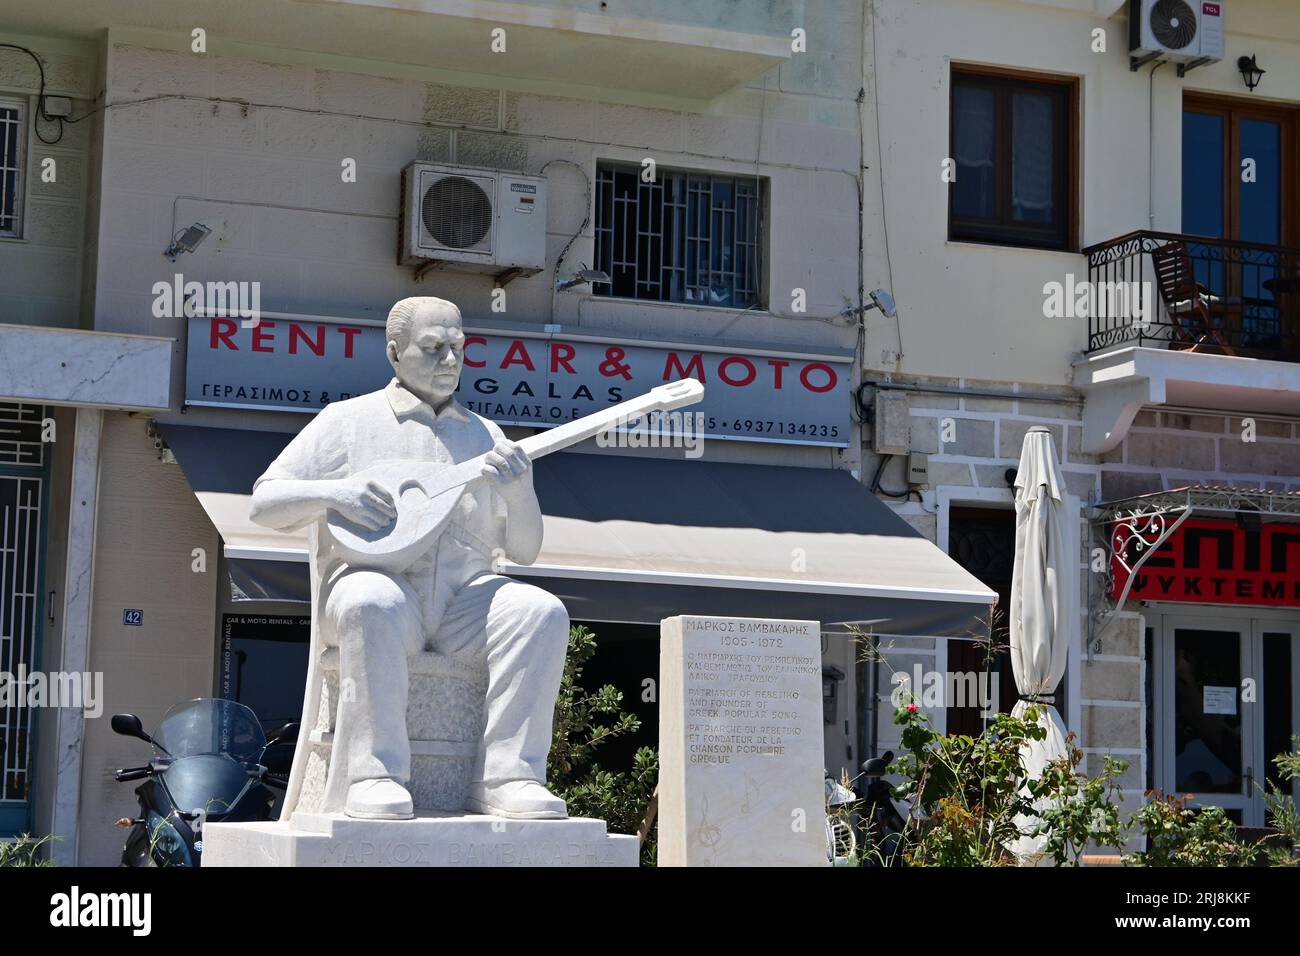 Sigalas Rentals and Statue of Bouzouki player, Markos Vamvakaris, Ermoupoli, Syros Island, Greece Stock Photo